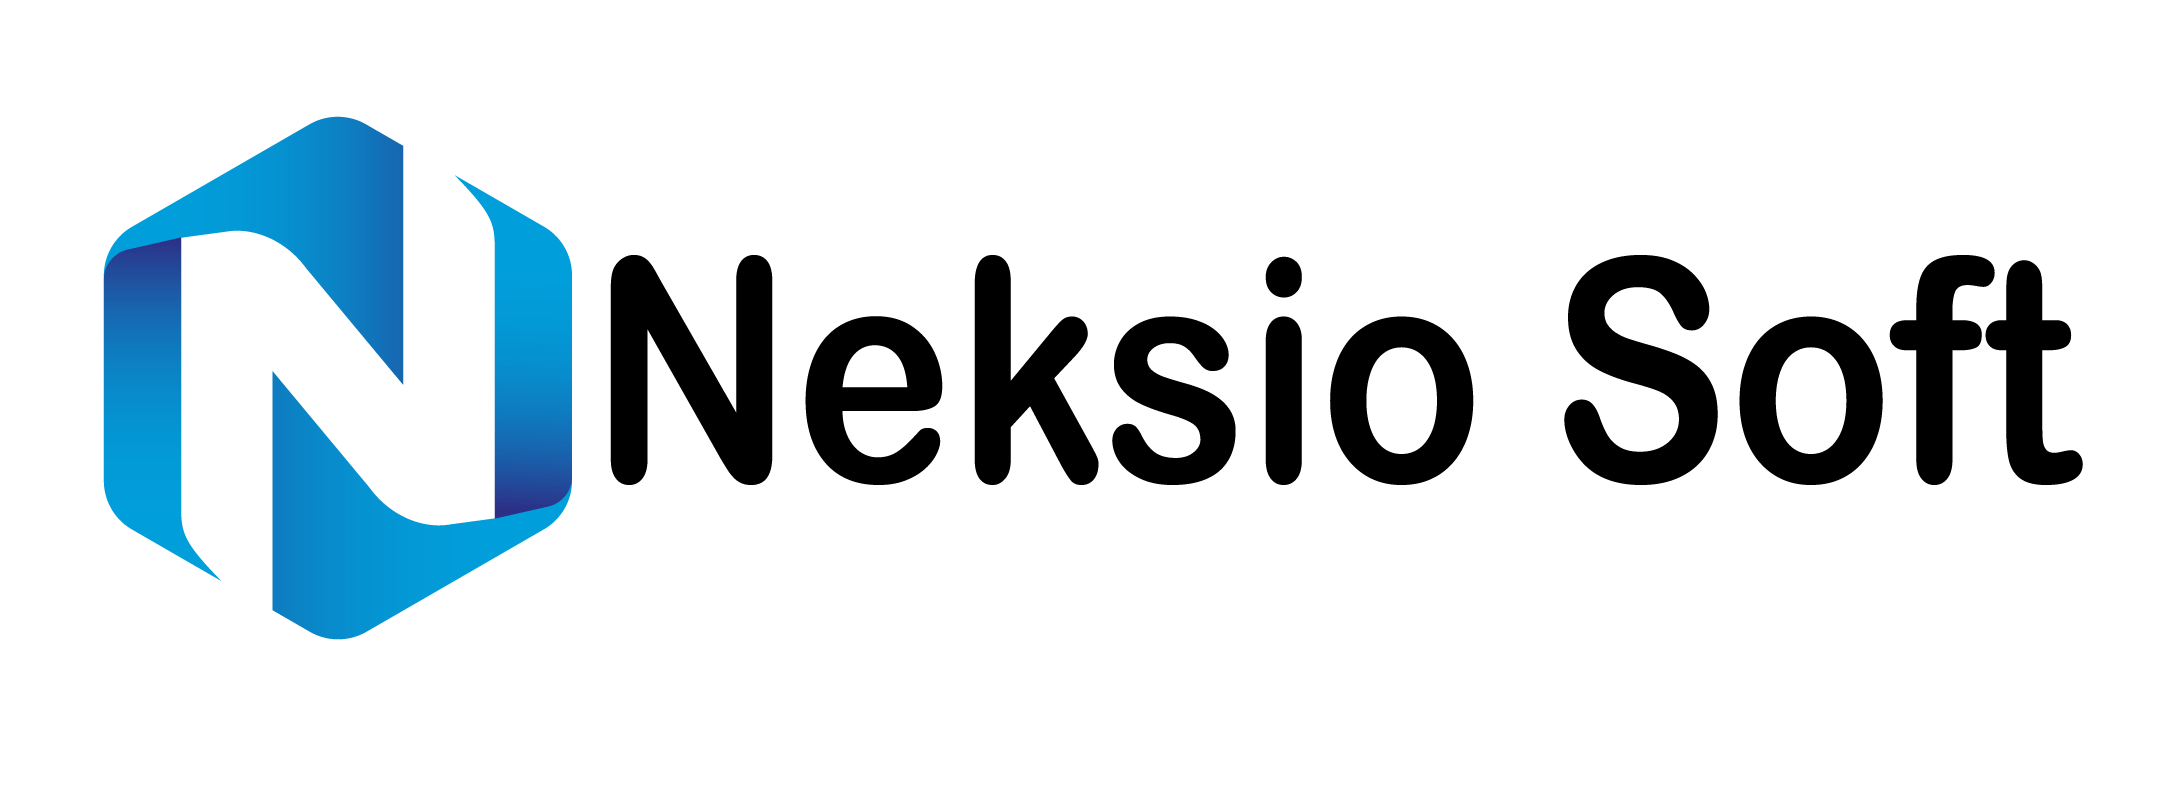 Neksio-Soft